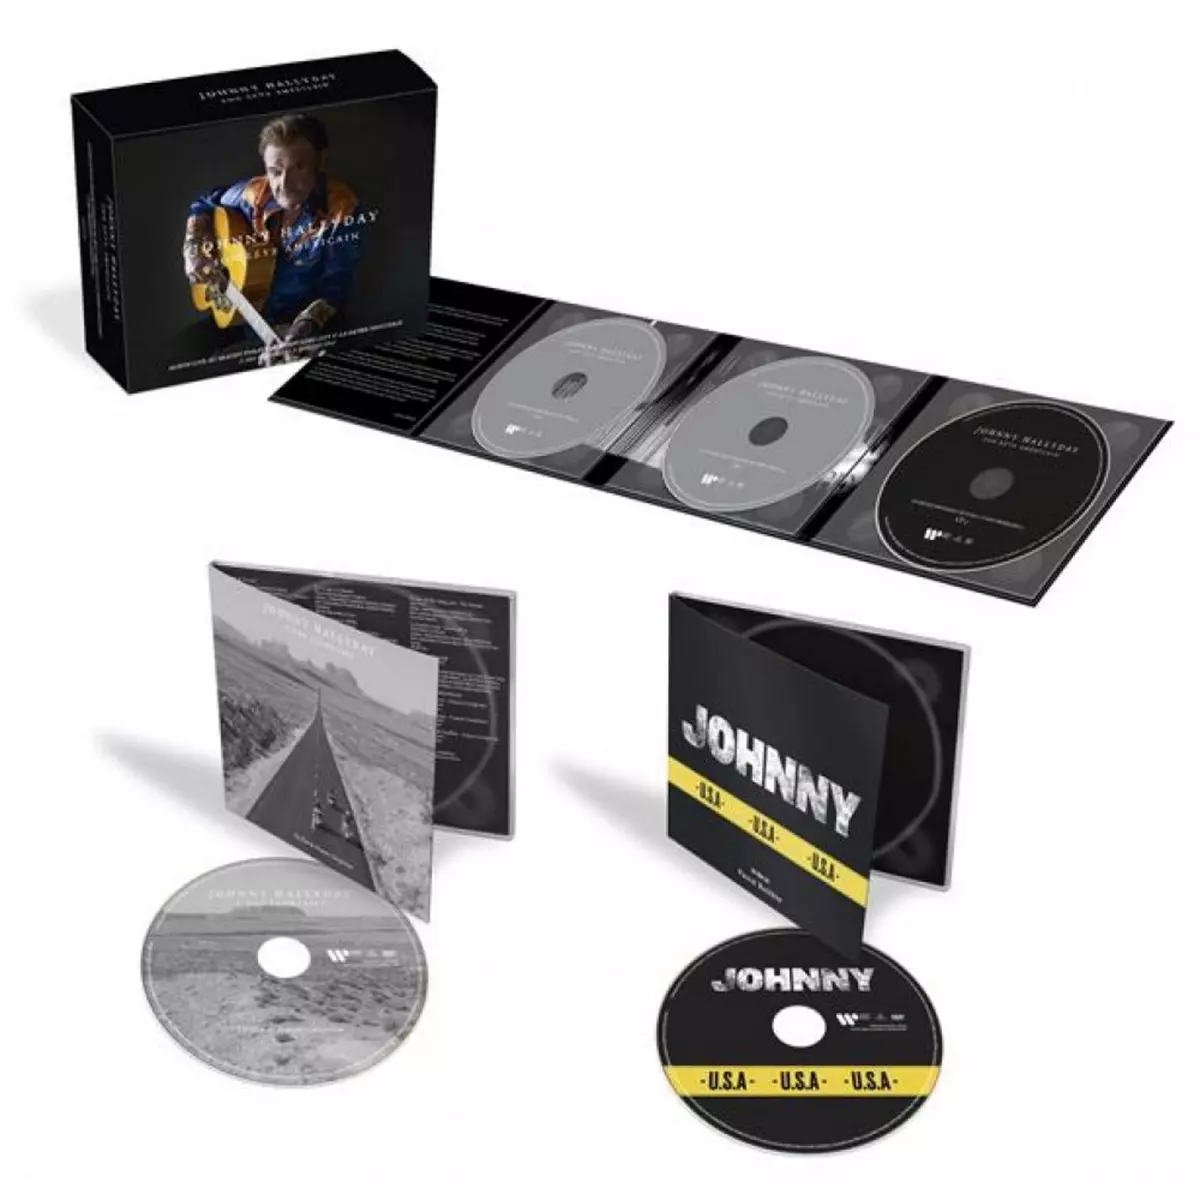 Warner Son rêve américain - Johnny Hallyday Coffret Edition limitée 